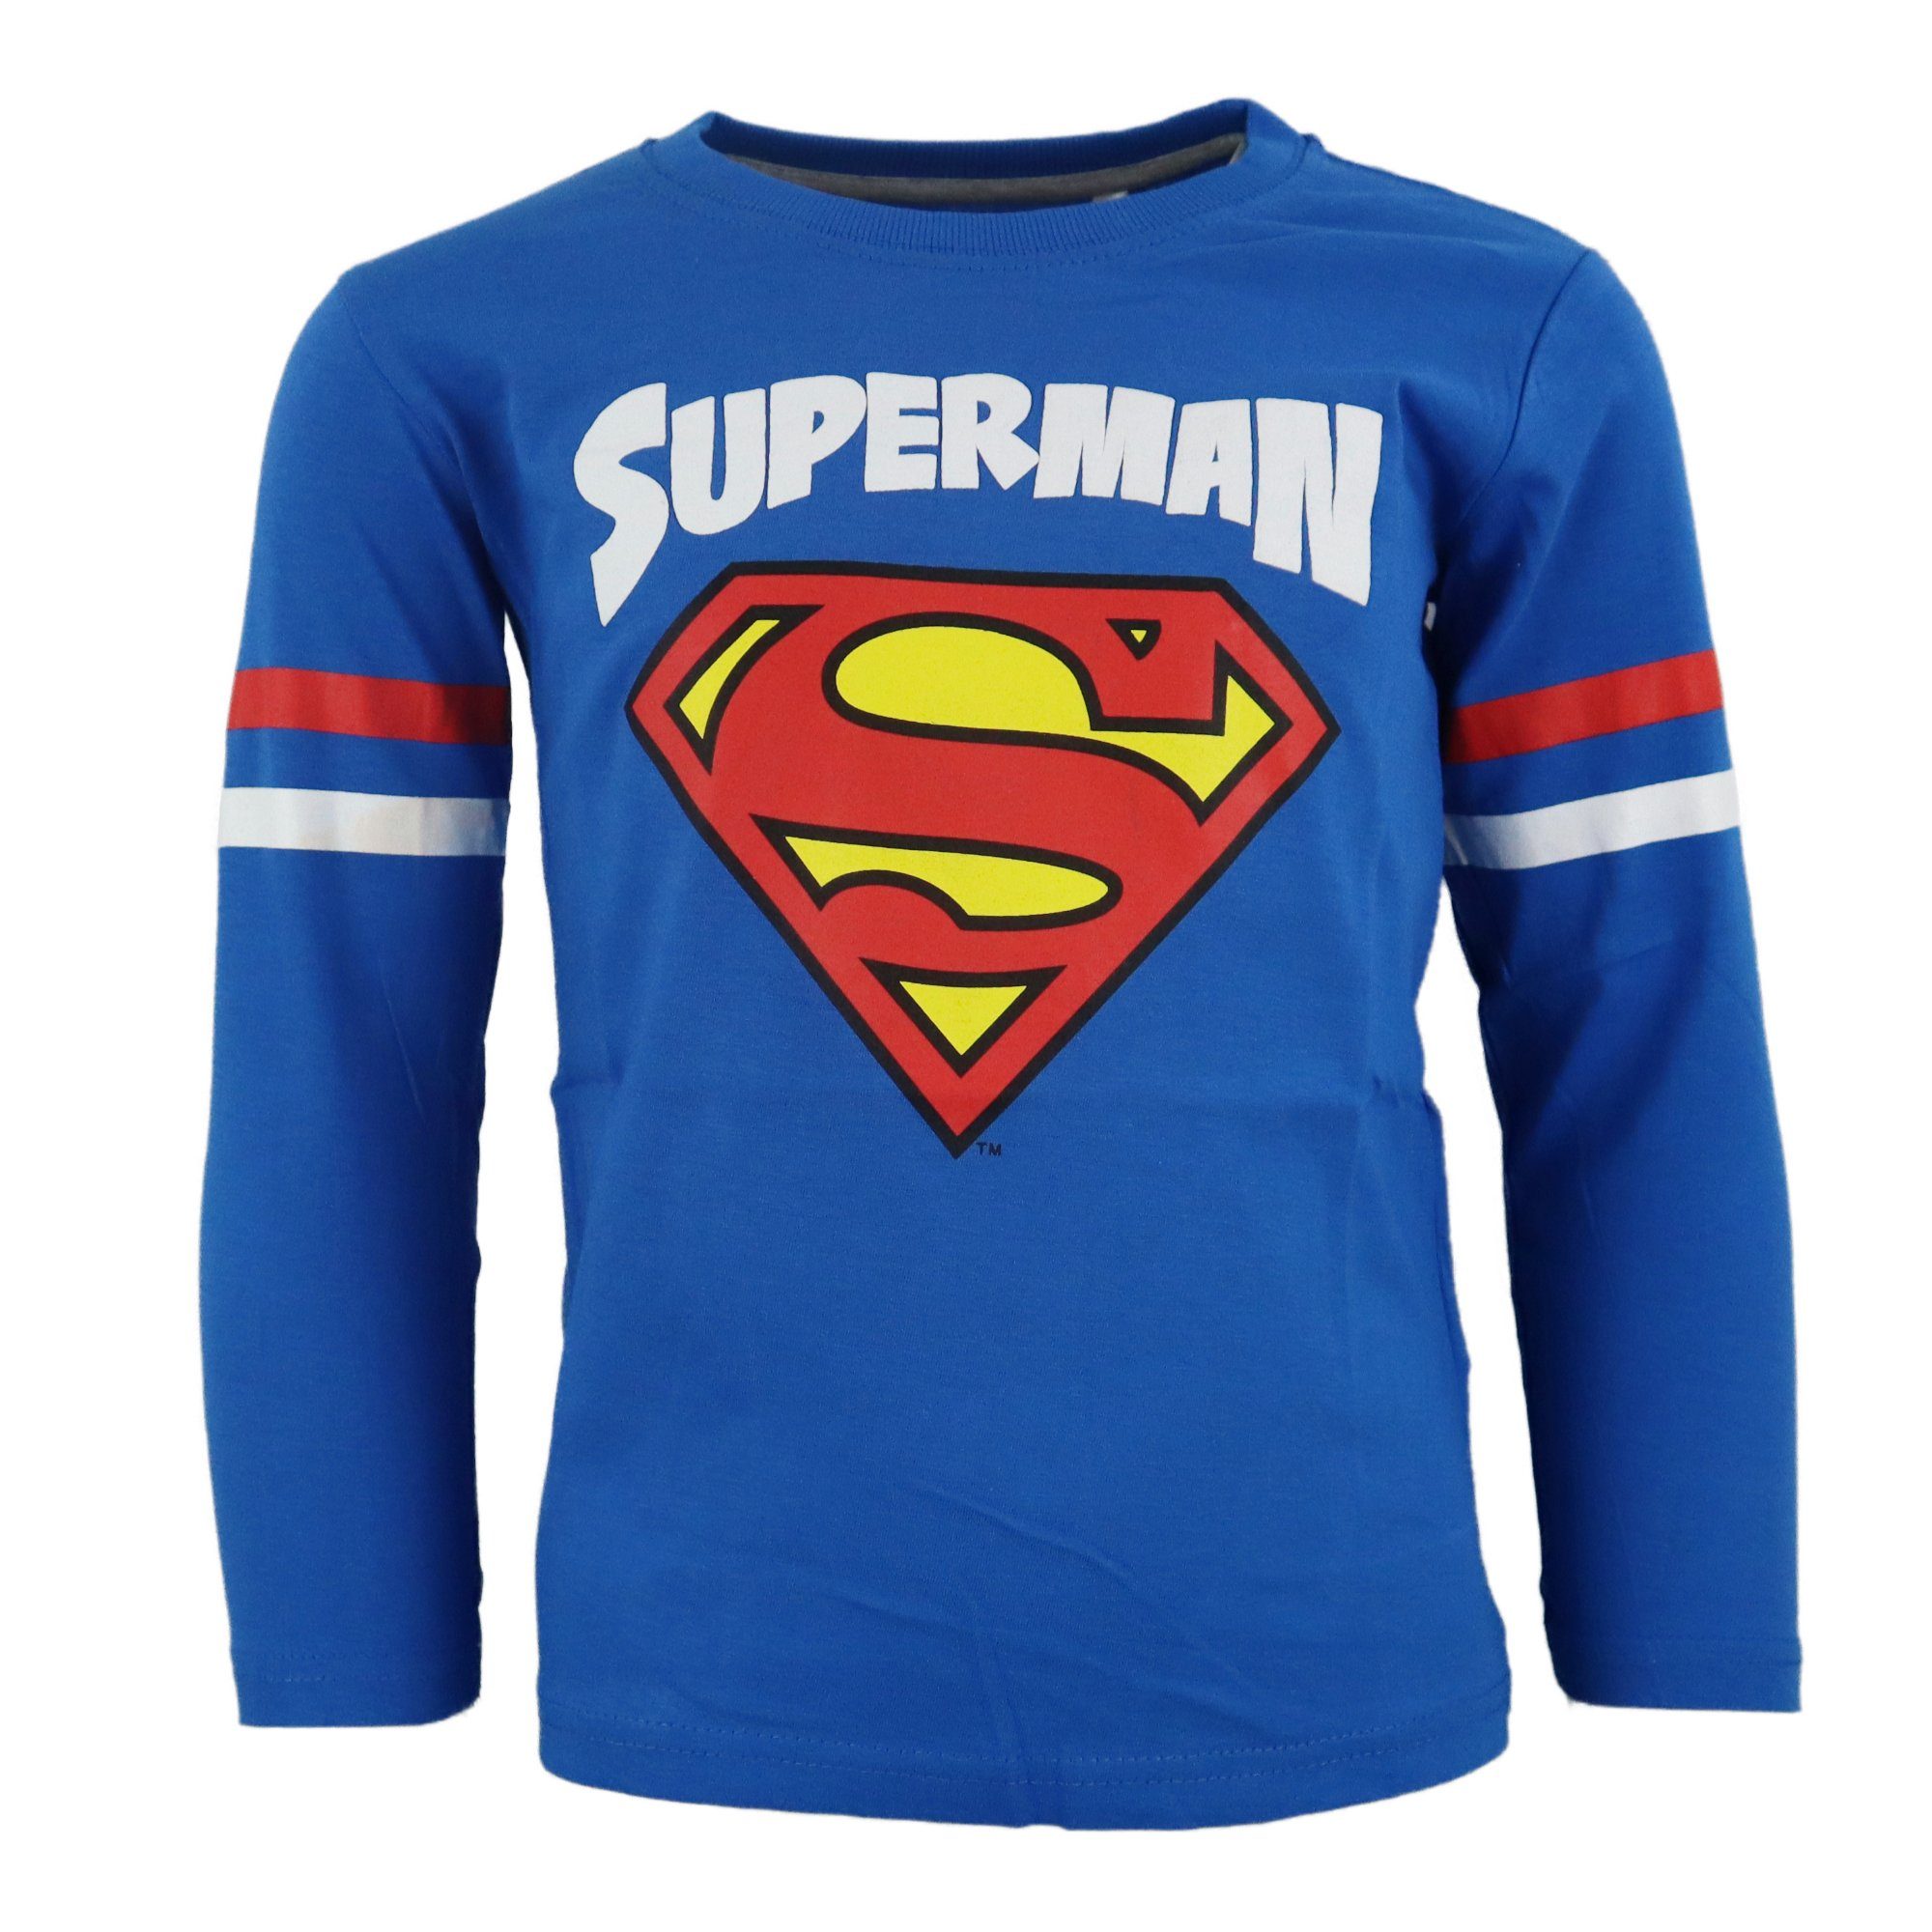 DC Comics Langarmshirt DC Comics Superman Kinder Jungen langarm Shirt Gr.  104 bis 134, Blau oder Grau